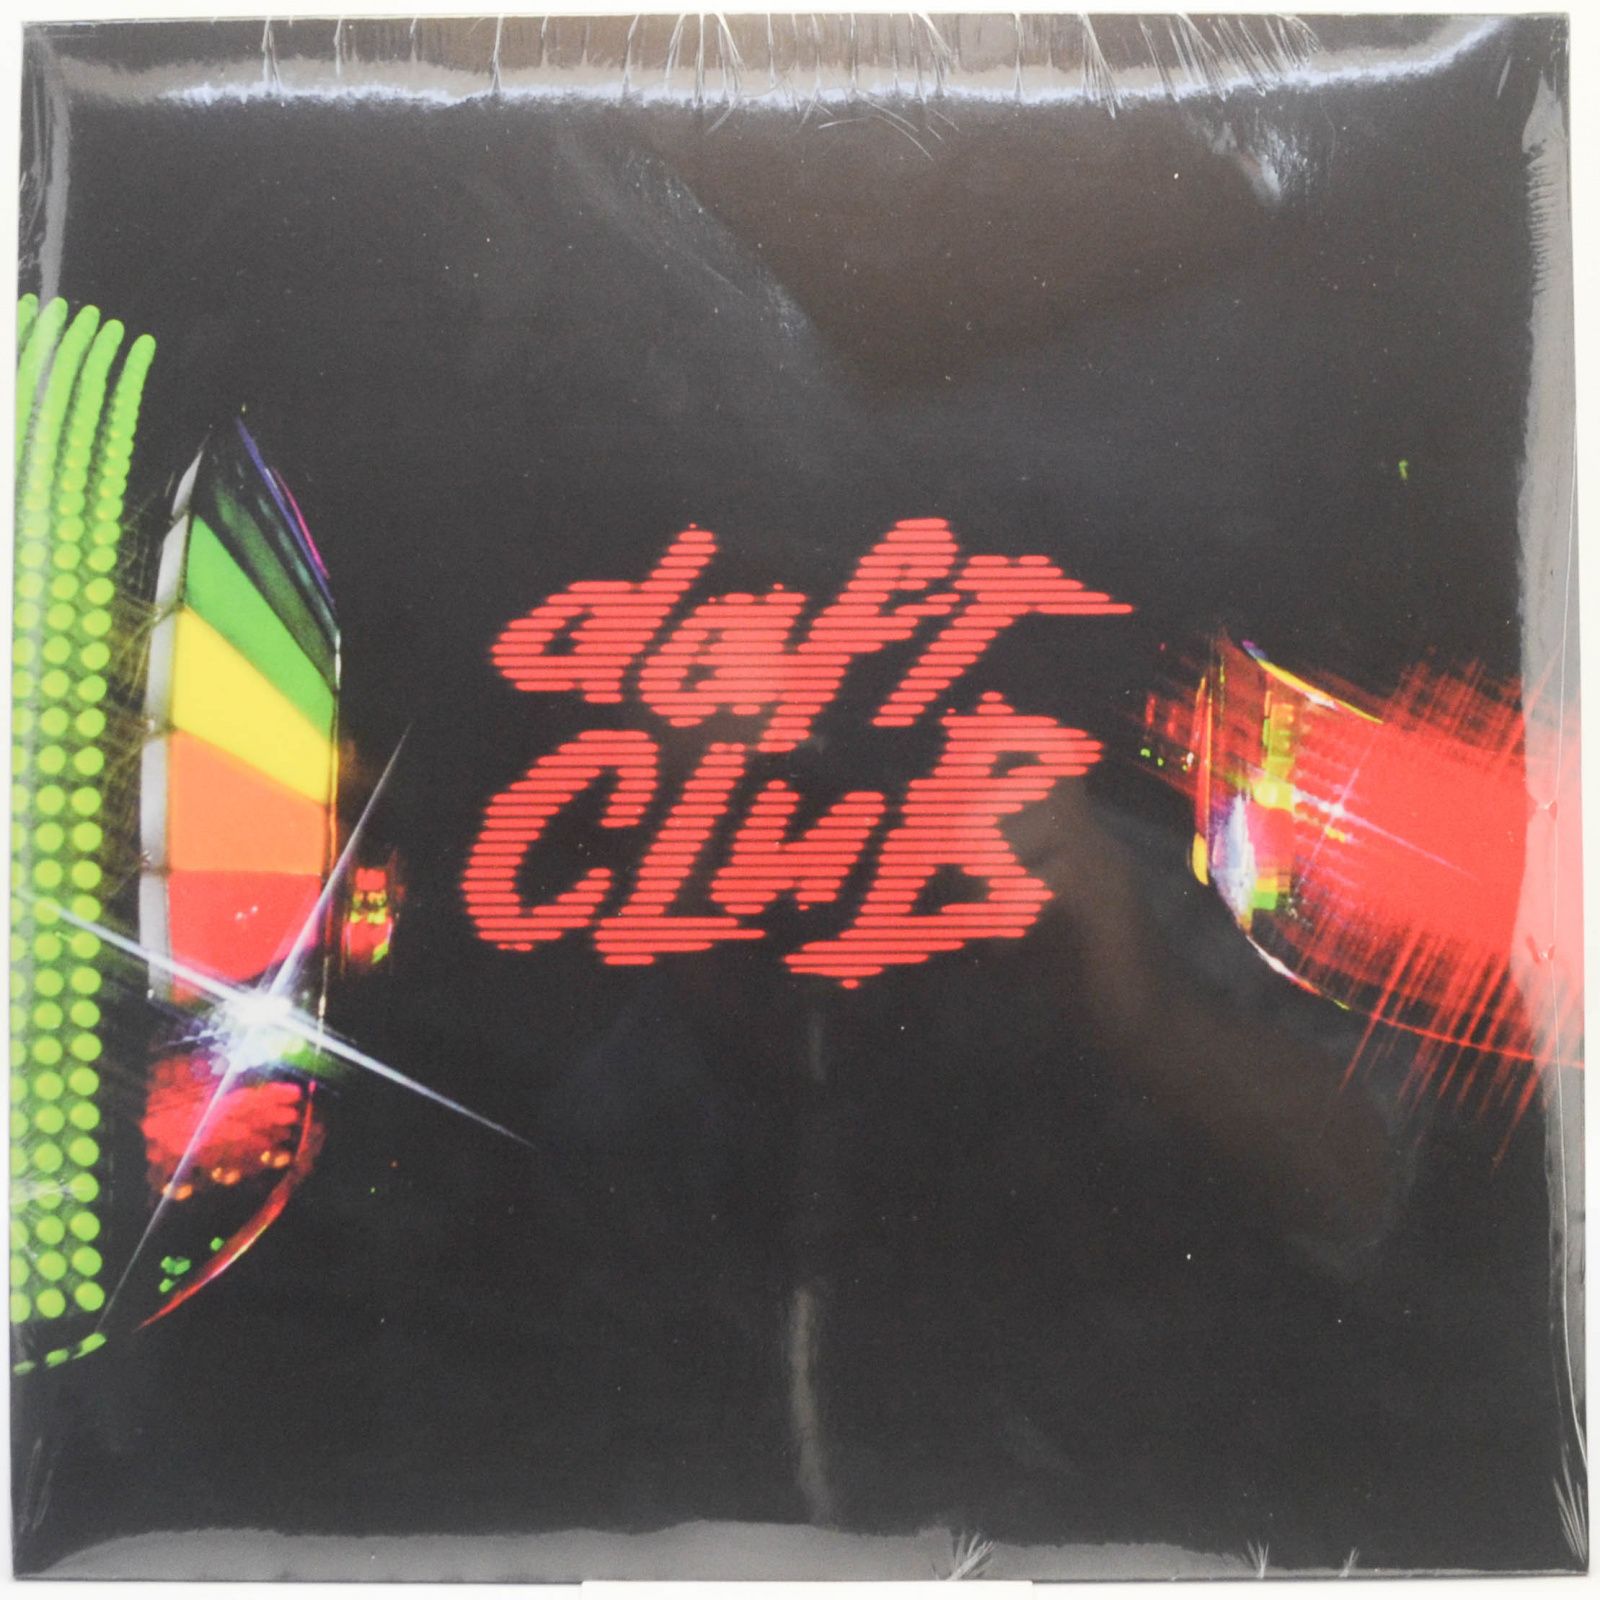 Daft Club (2LP), 2003